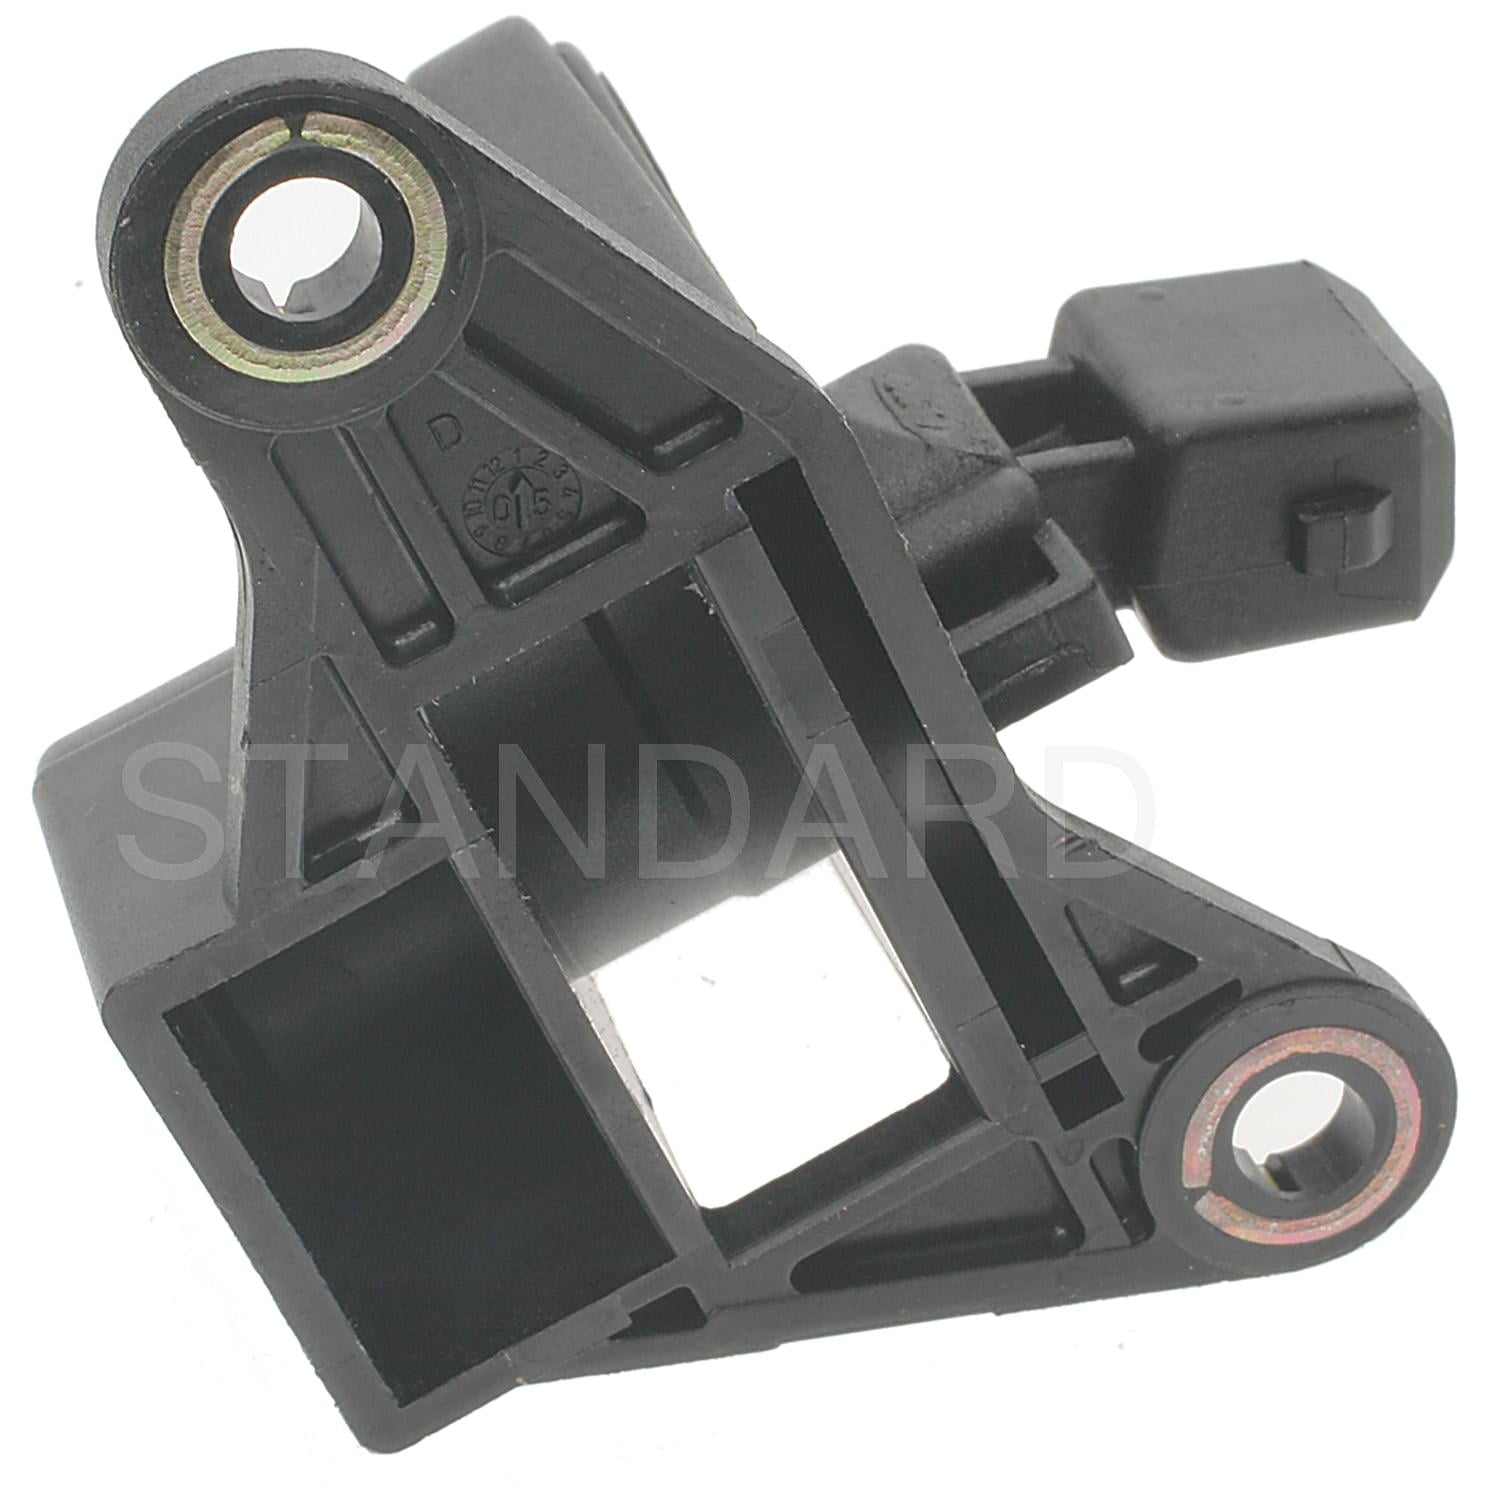 Crank Position Sensor  Standard Motor Products  PC250